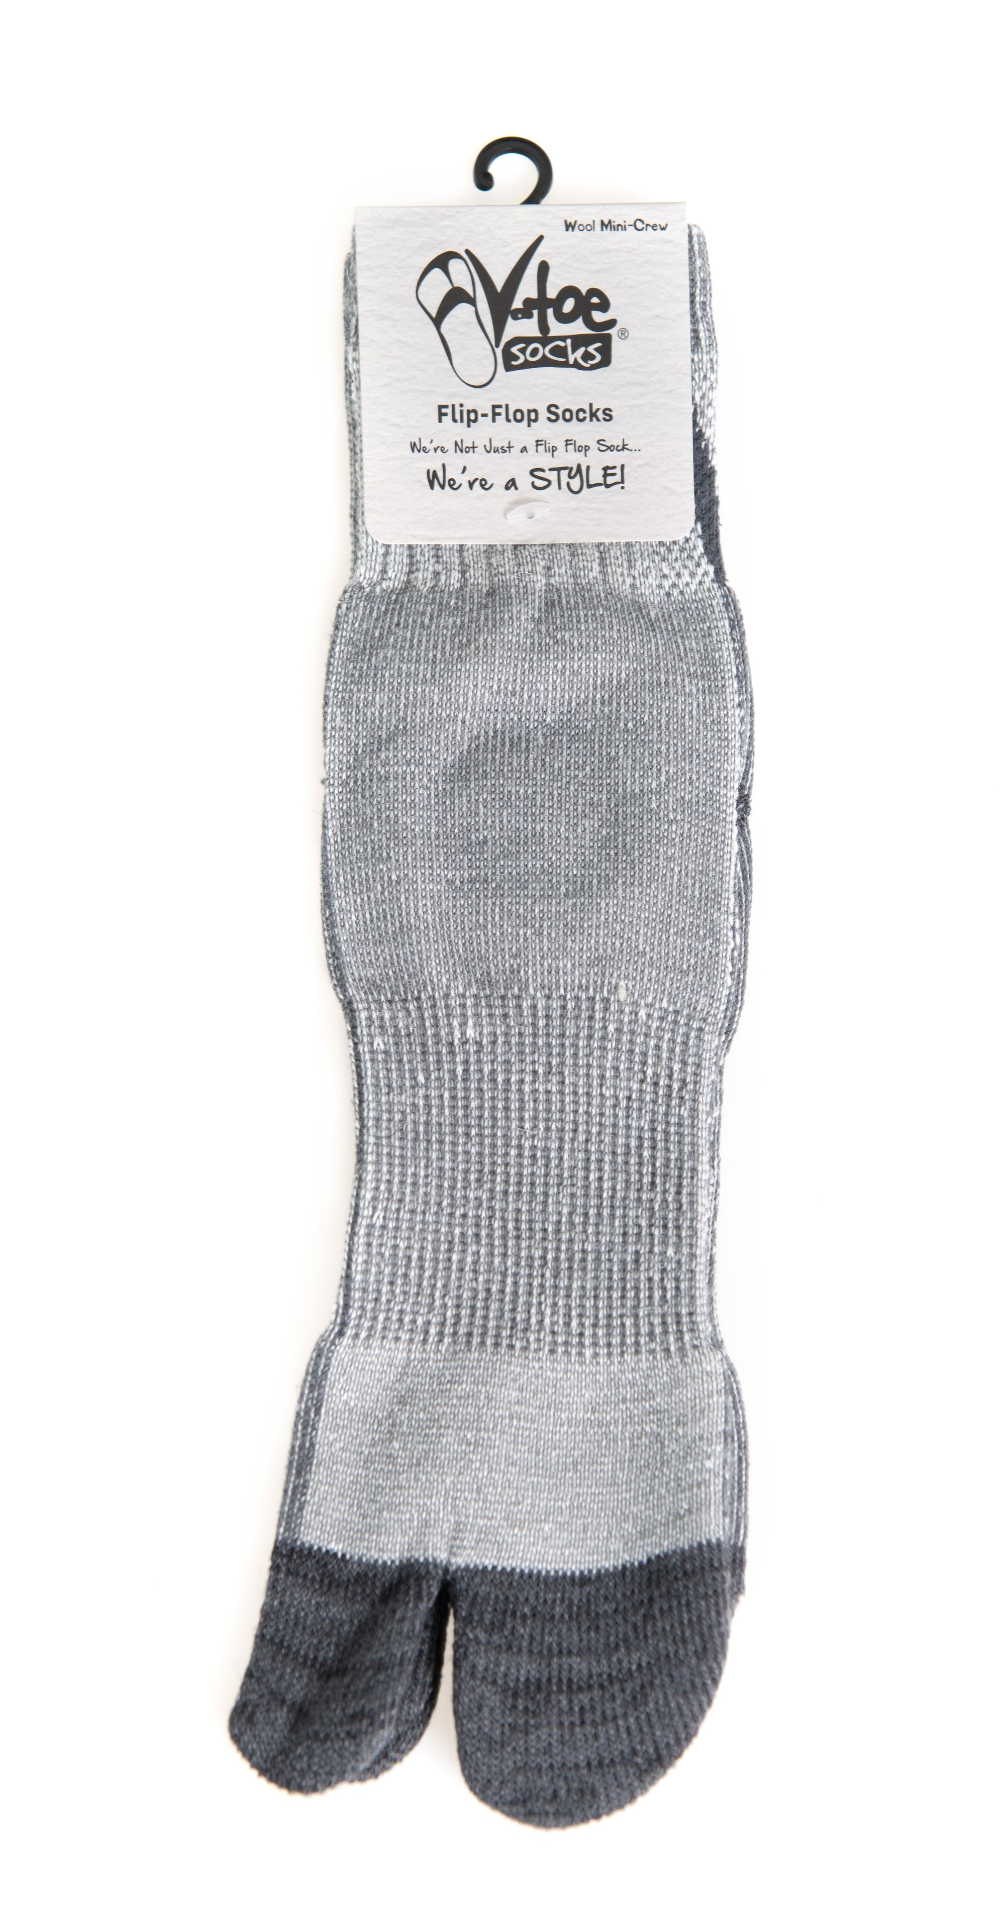 3 Pairs Wool Light Grey V-Toe Tabi Socks for Hiking or Casual Flip-Flops